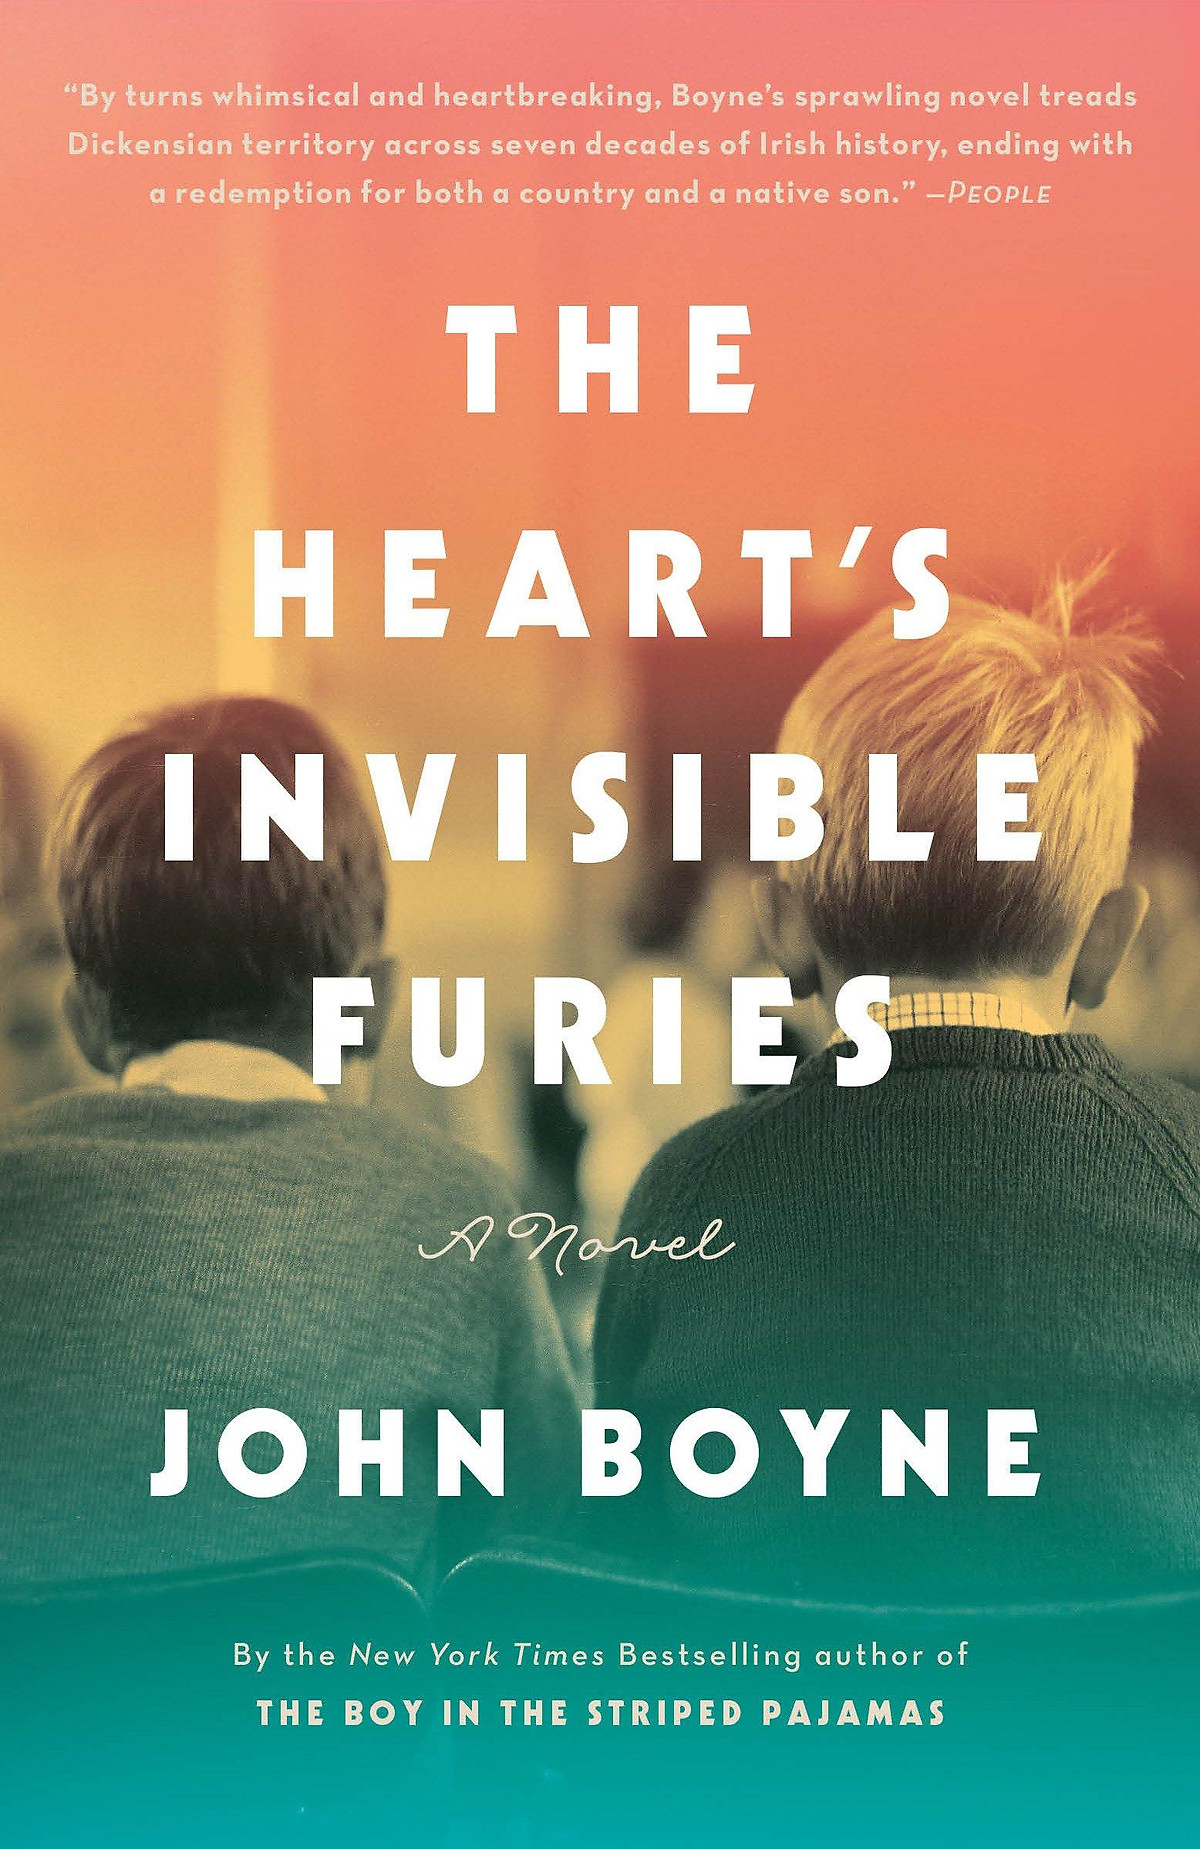 The Heart's Invisible Furies: A Novel - John Boyne